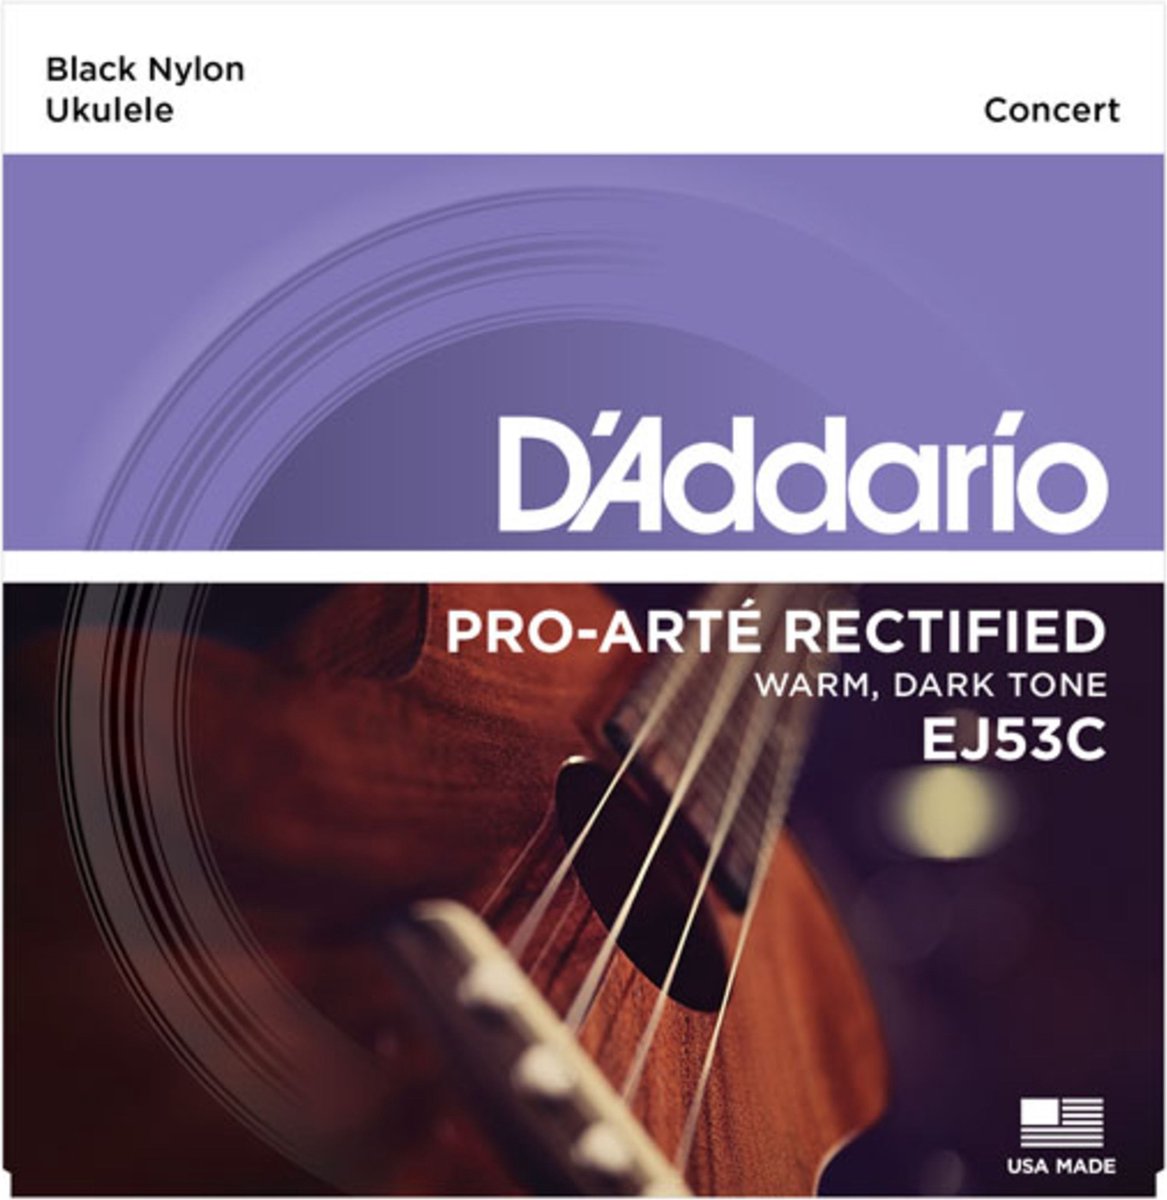 D'Addario Ukulele Strings EJ53C Concert Black Nylon 26-32-36-28 - Snaren